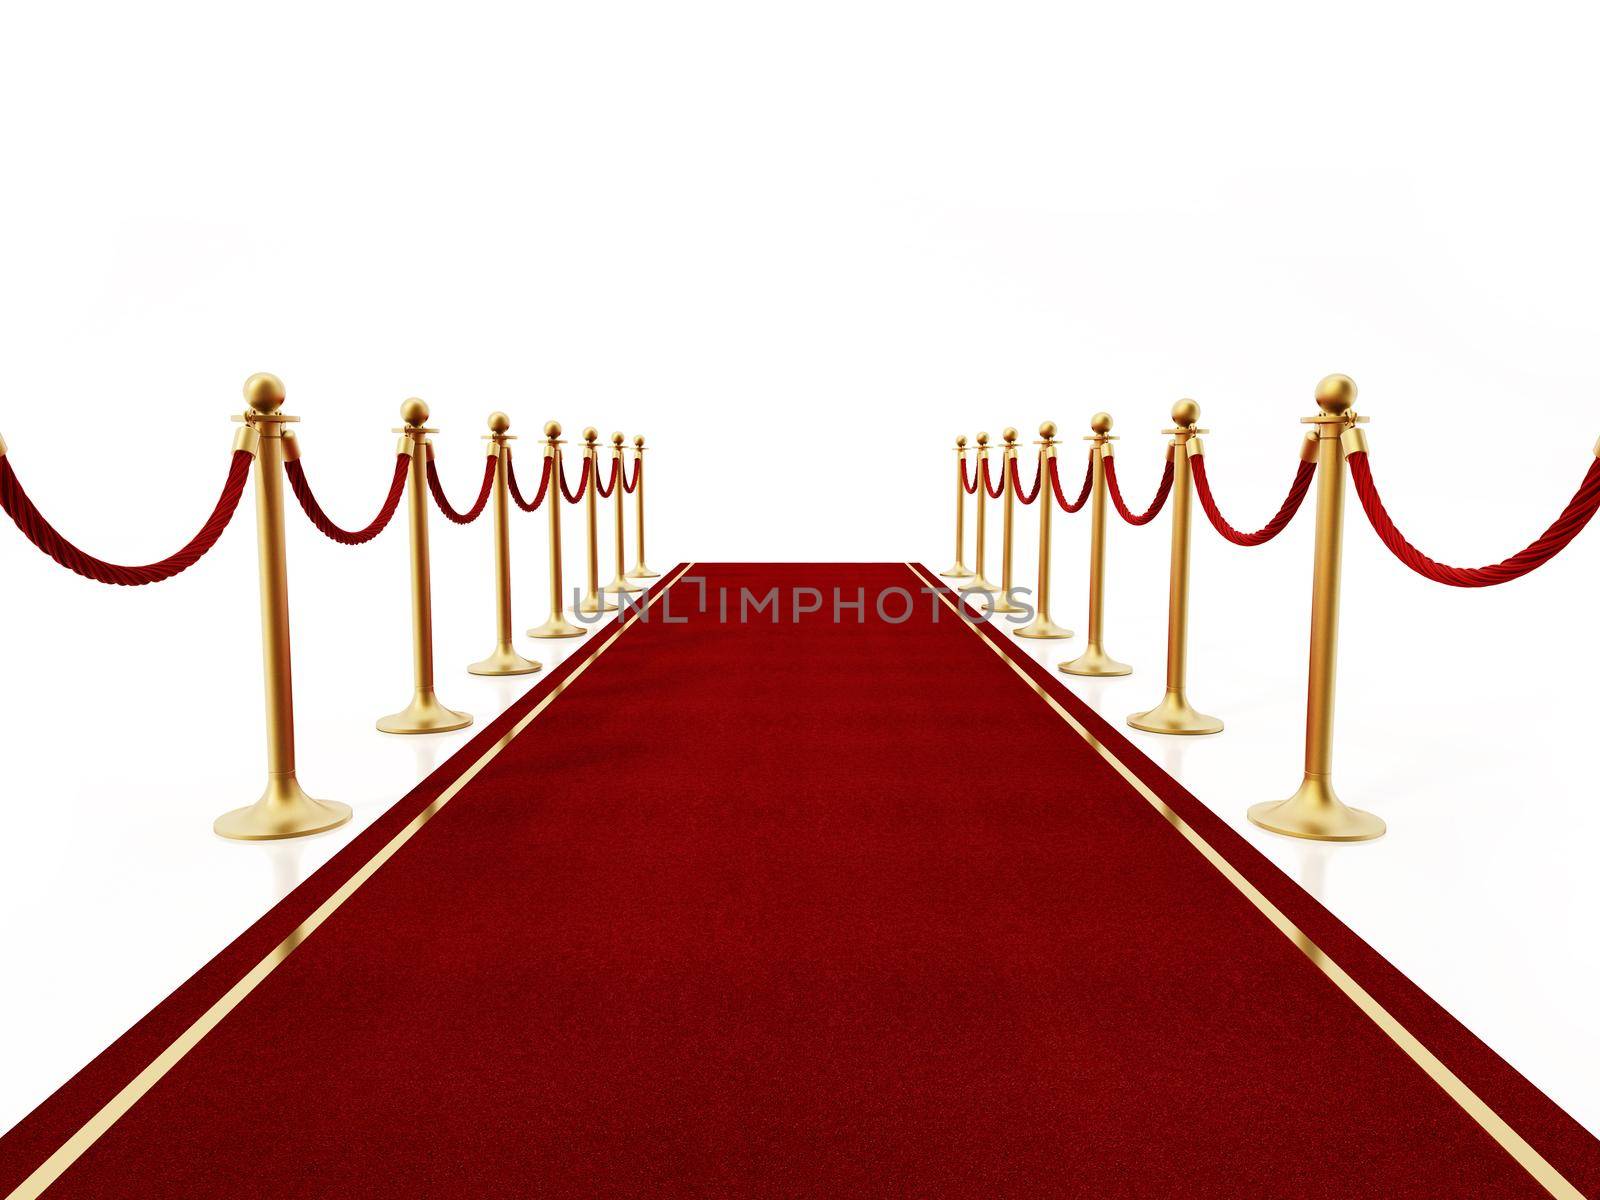 Red carpet and velvet ropes isolated on white background. 3D illustration by Simsek